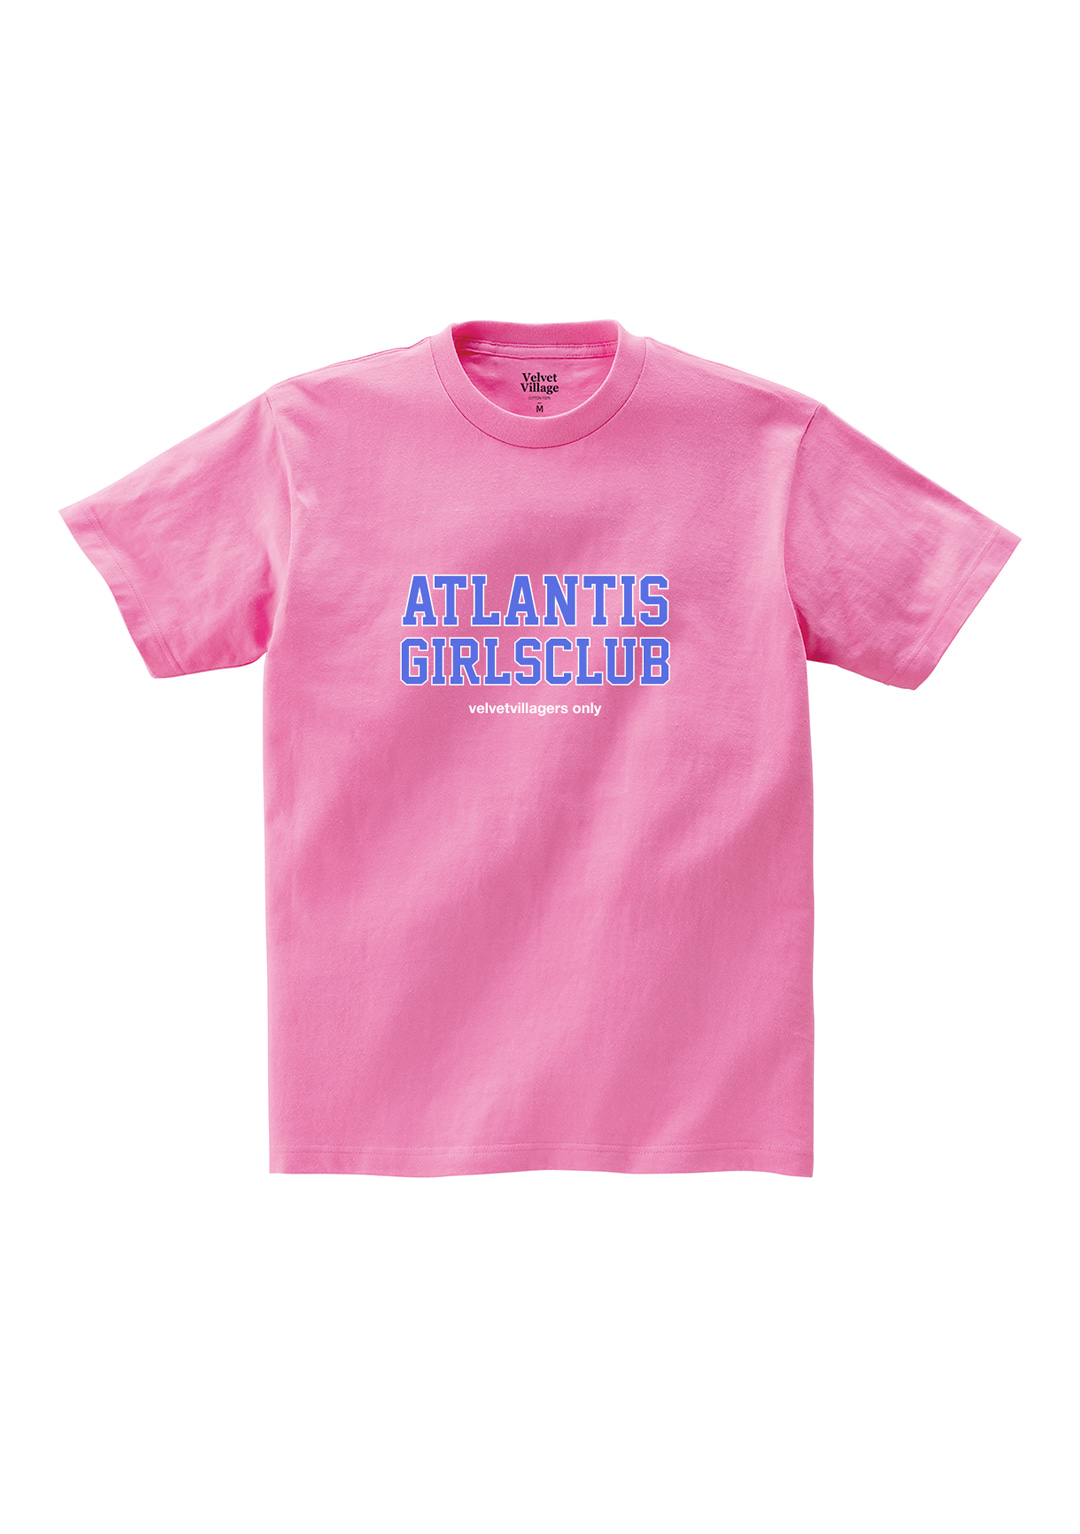 Atlantis girls club T-shirt (Pink)